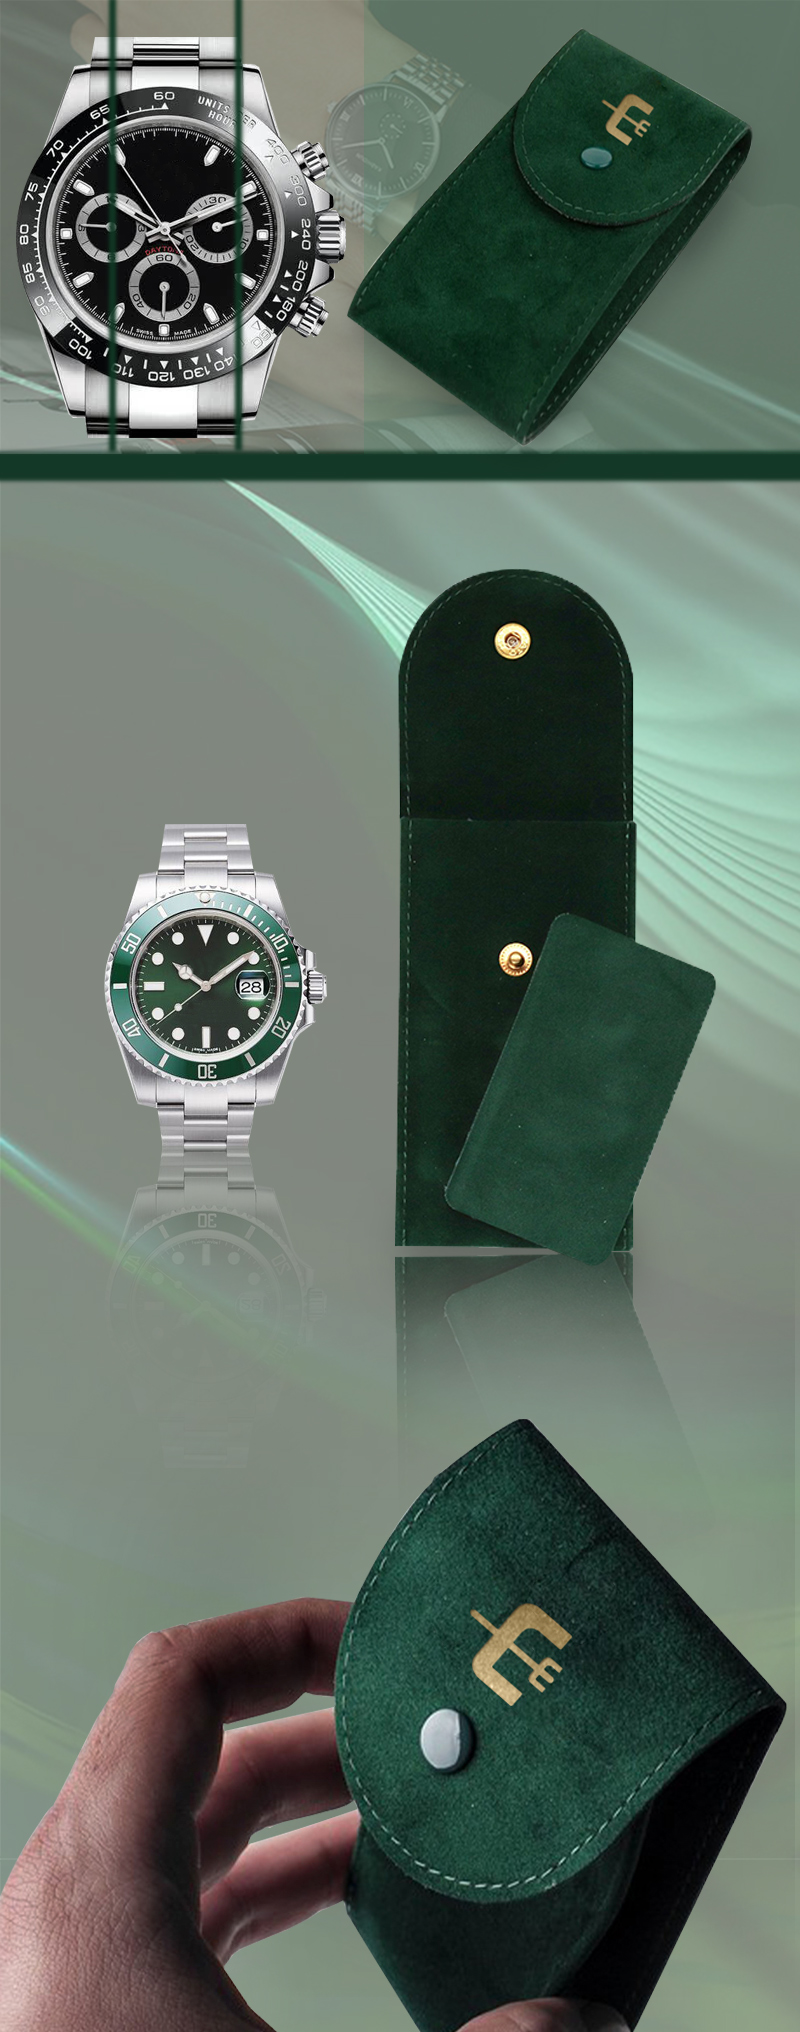 Customized Rolex pouches